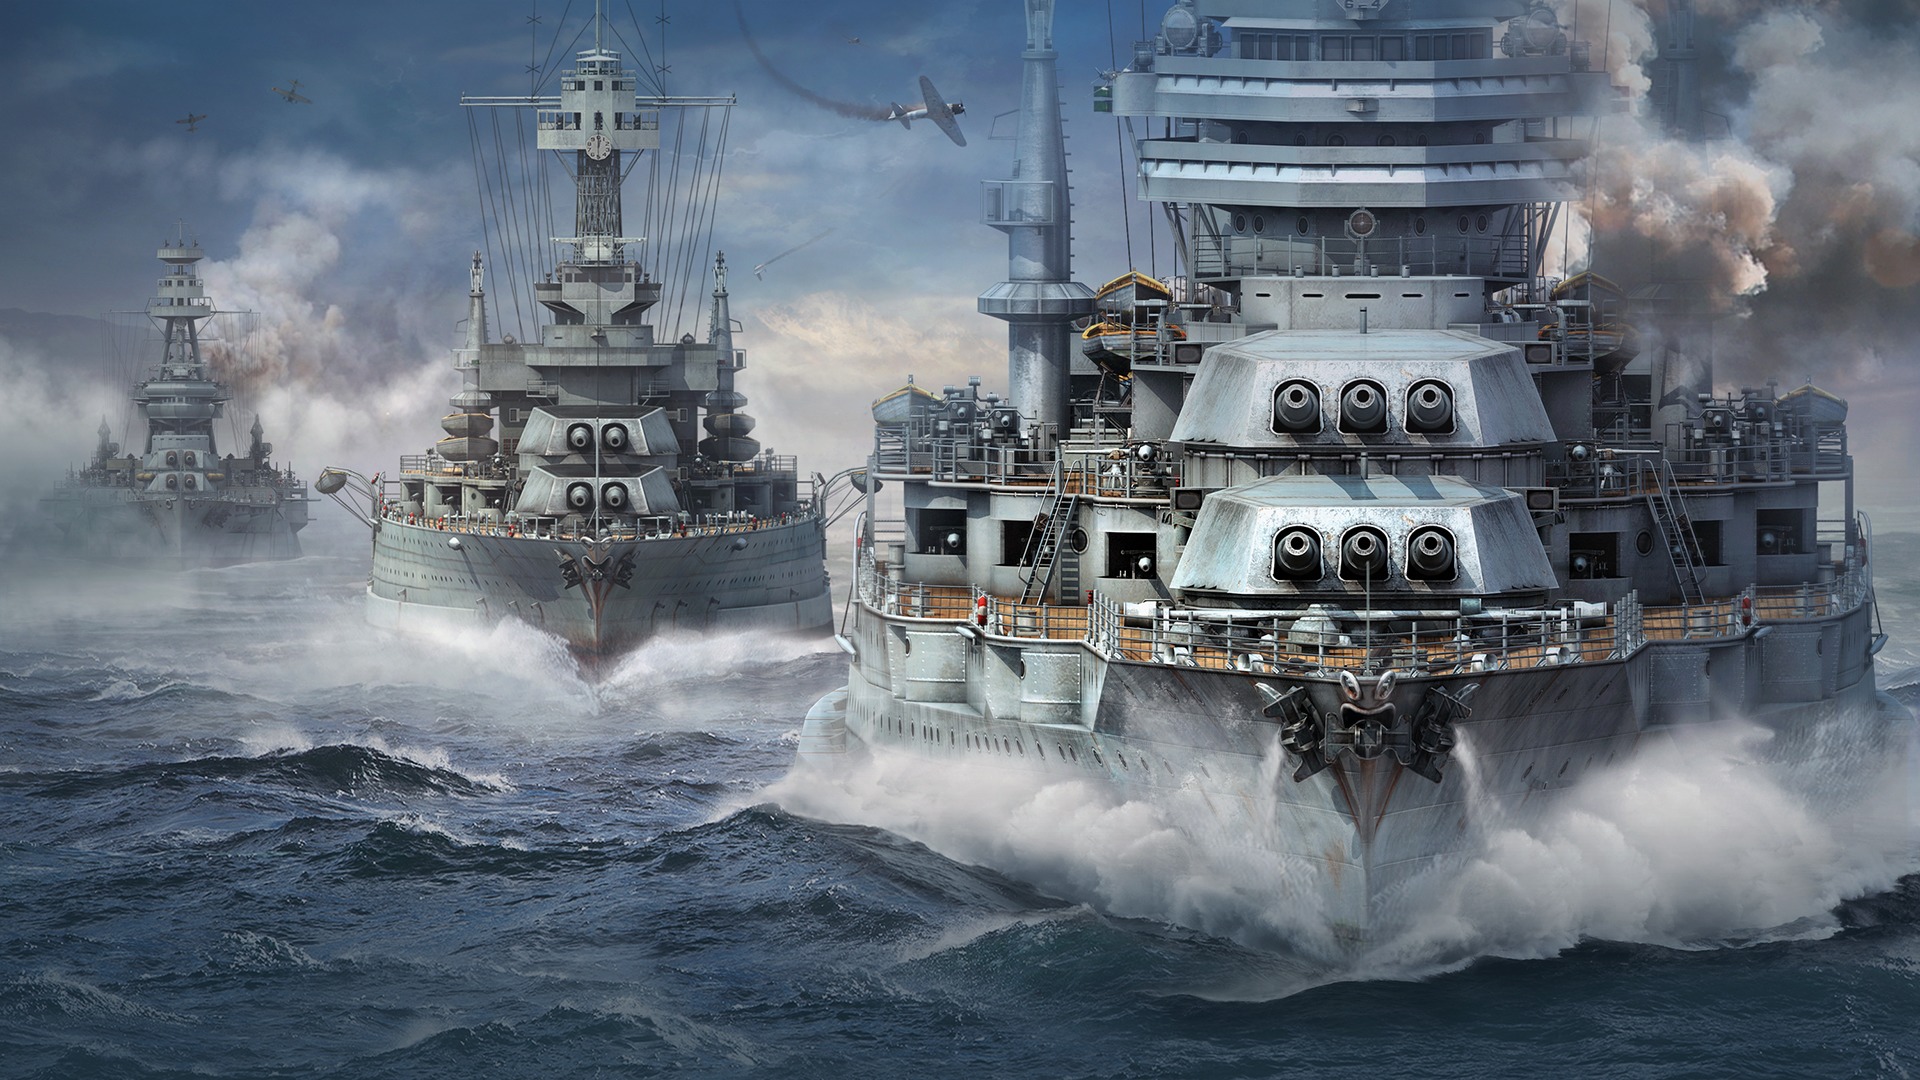 Amazing World Of Battleships Pictures & Backgrounds